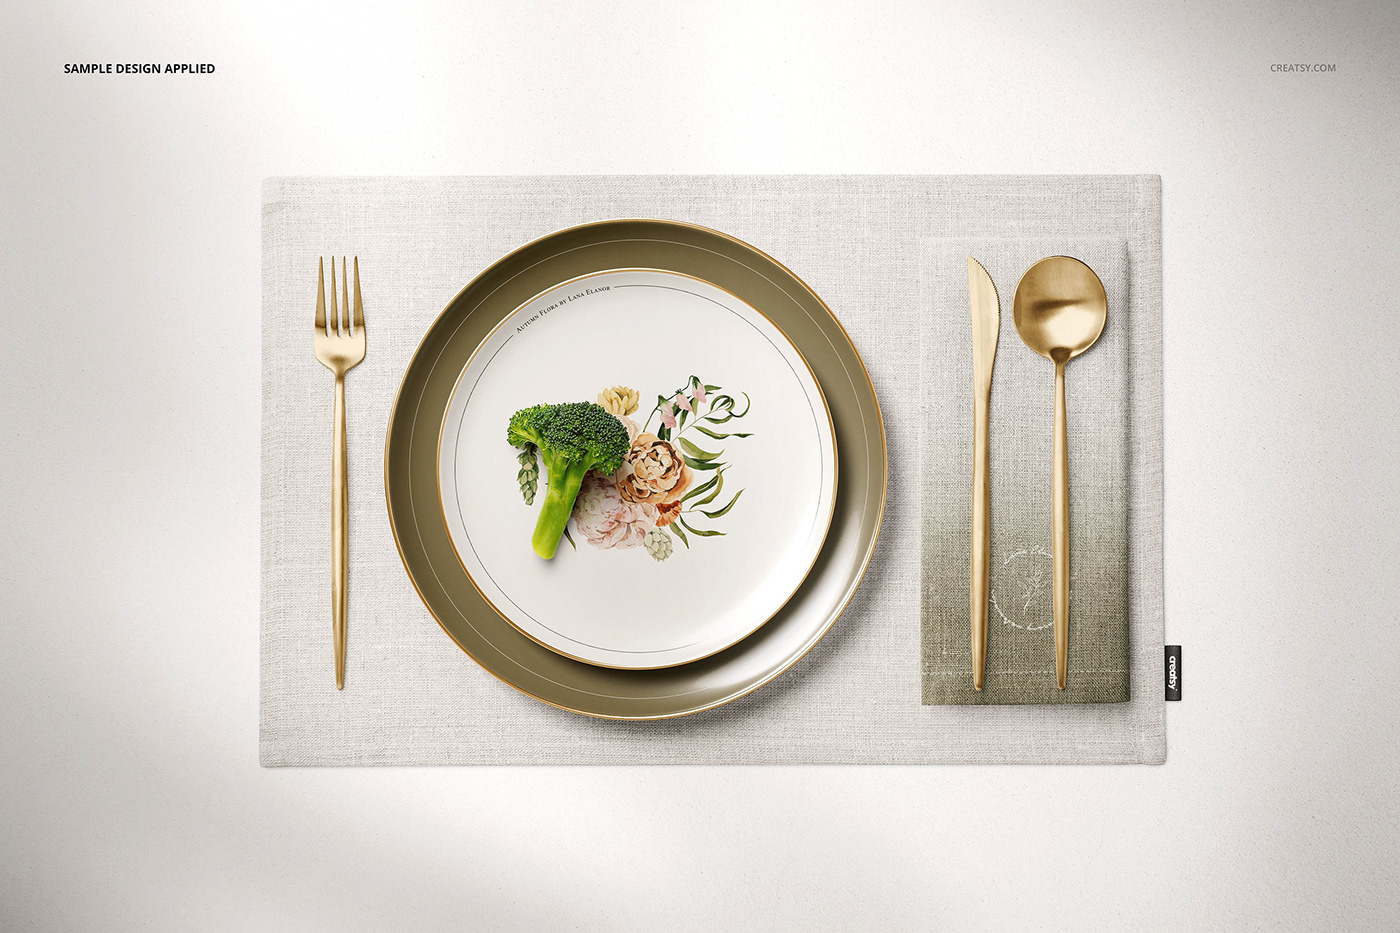 mock-up Mockup mockups template cotton creatsy linen plate table tableware